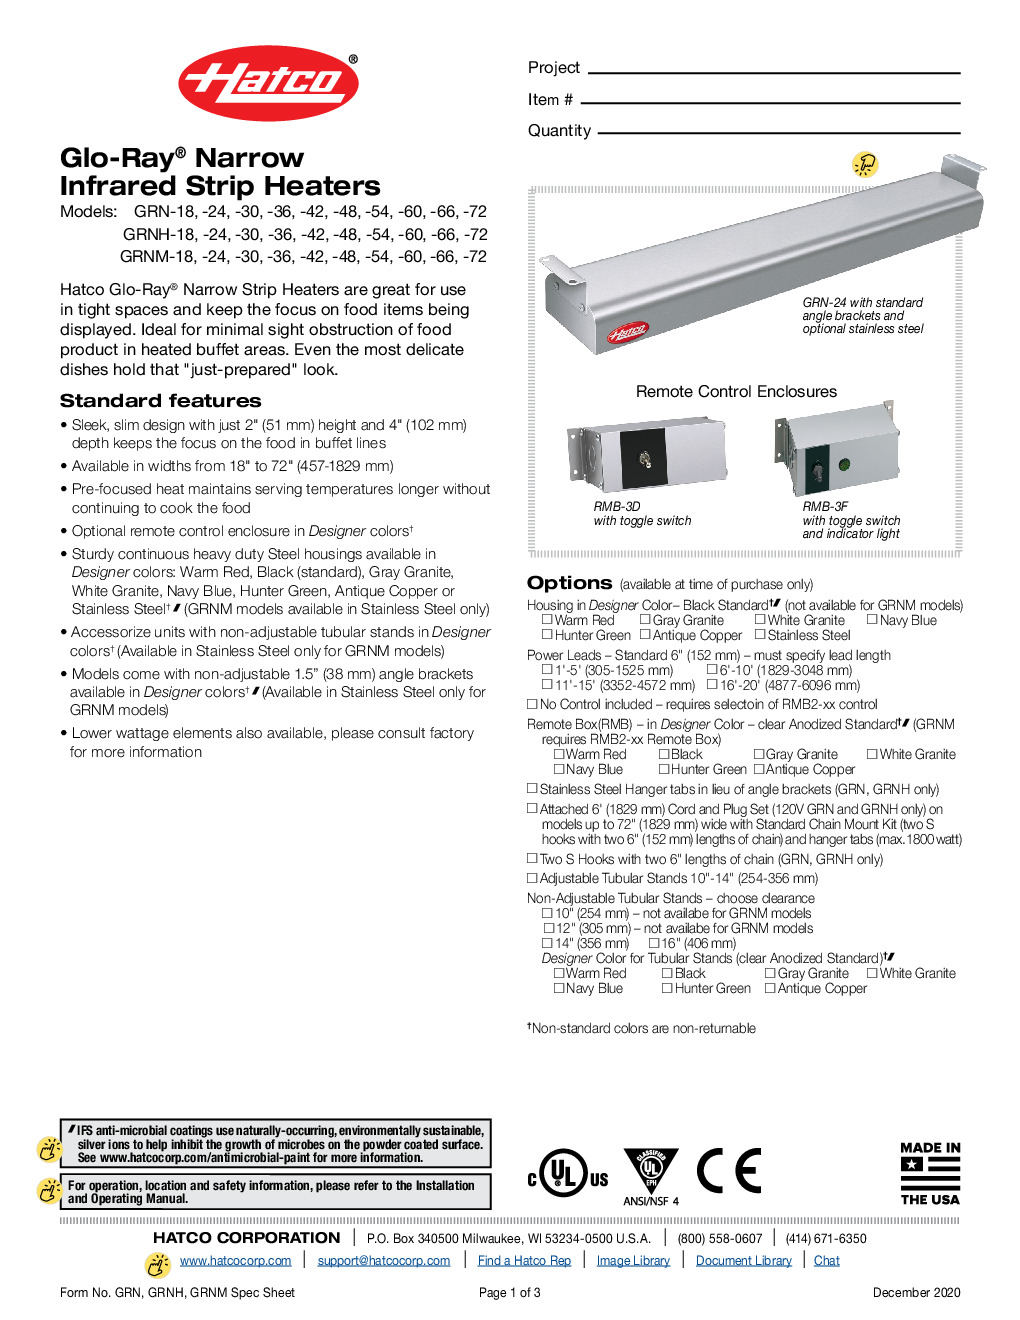 Hatco GRN/H-60 Glo-Ray Narrow Infrared Strip Heaters